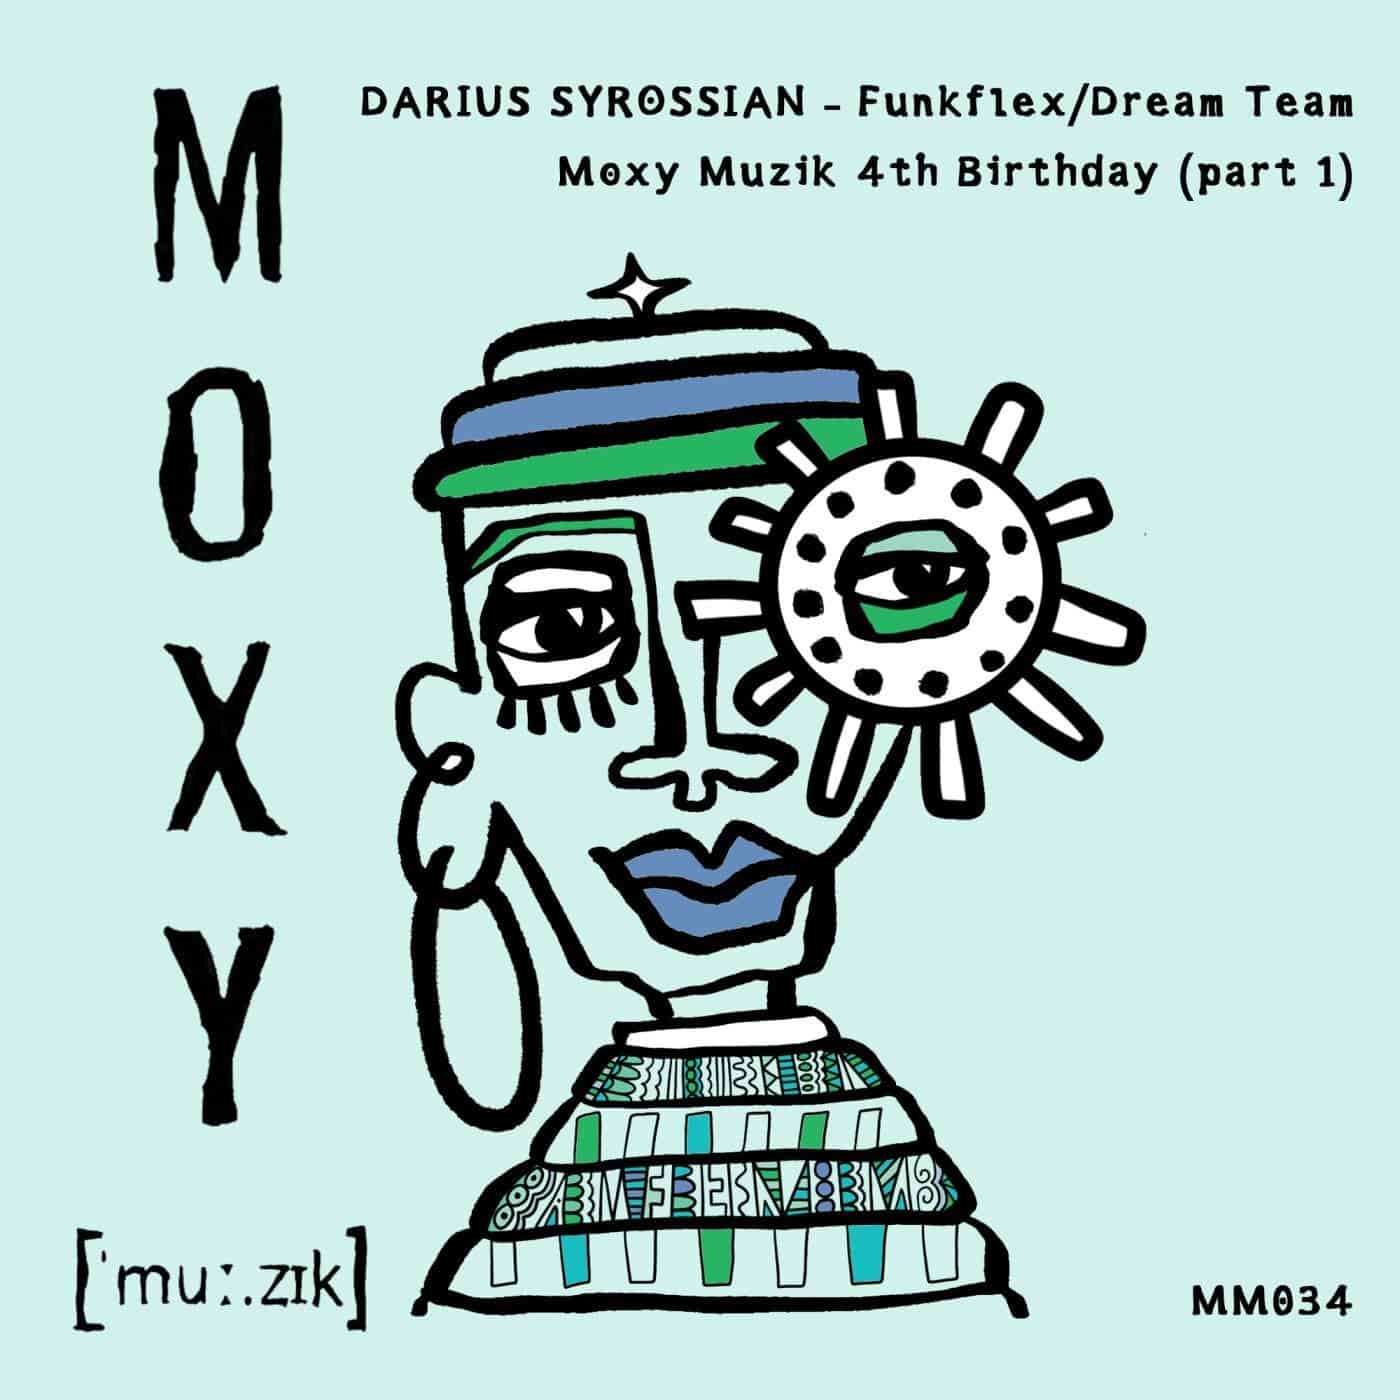 image cover: Darius Syrossian - Funkflex / Dream Team / MM034